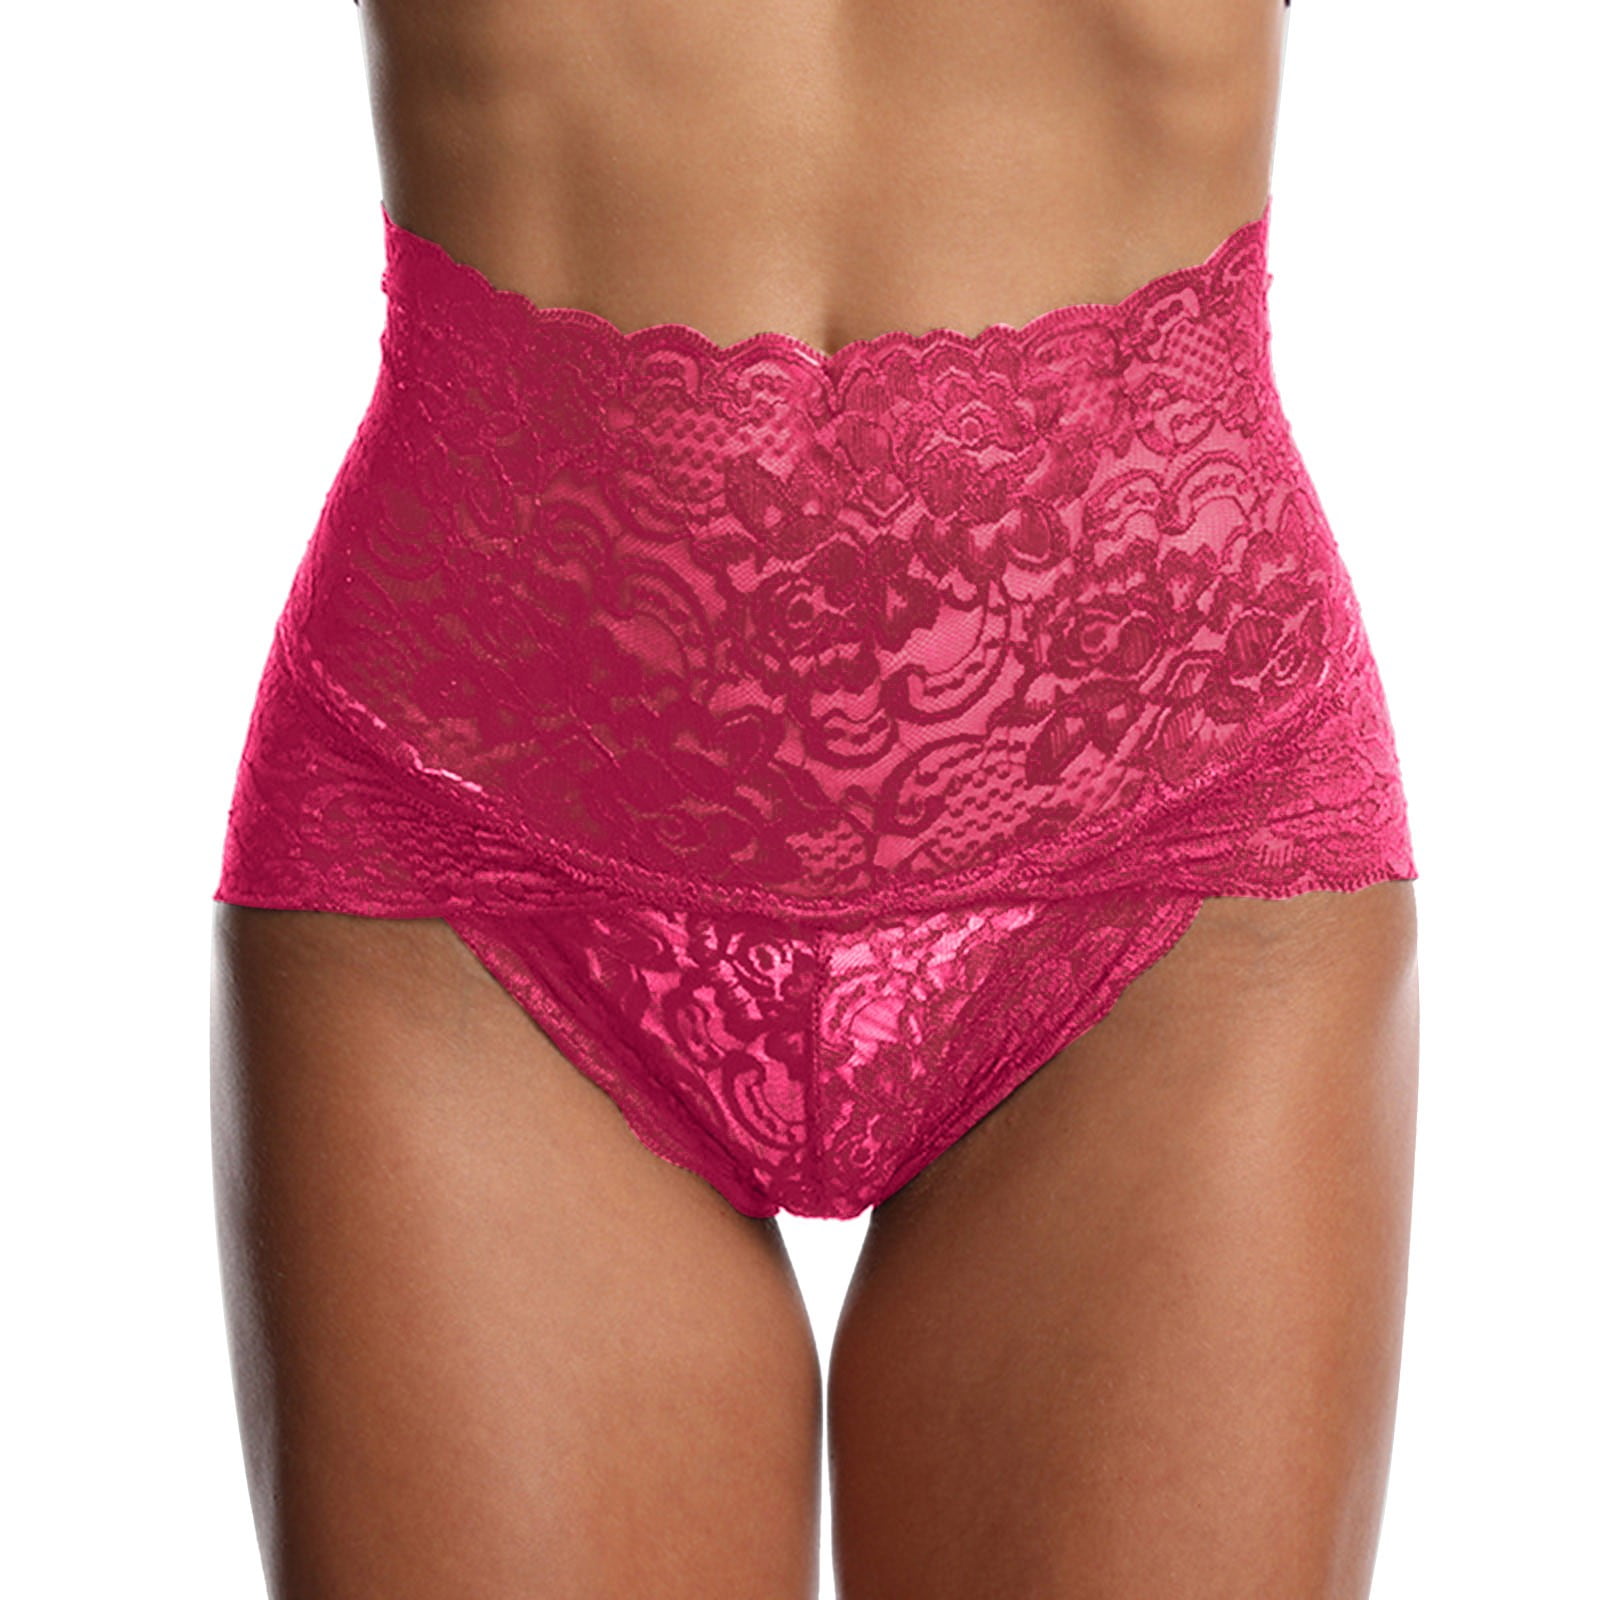 adviicd Cute Underwear Women's Embrace Lace Hi-Cut Brief Panty Beige Large